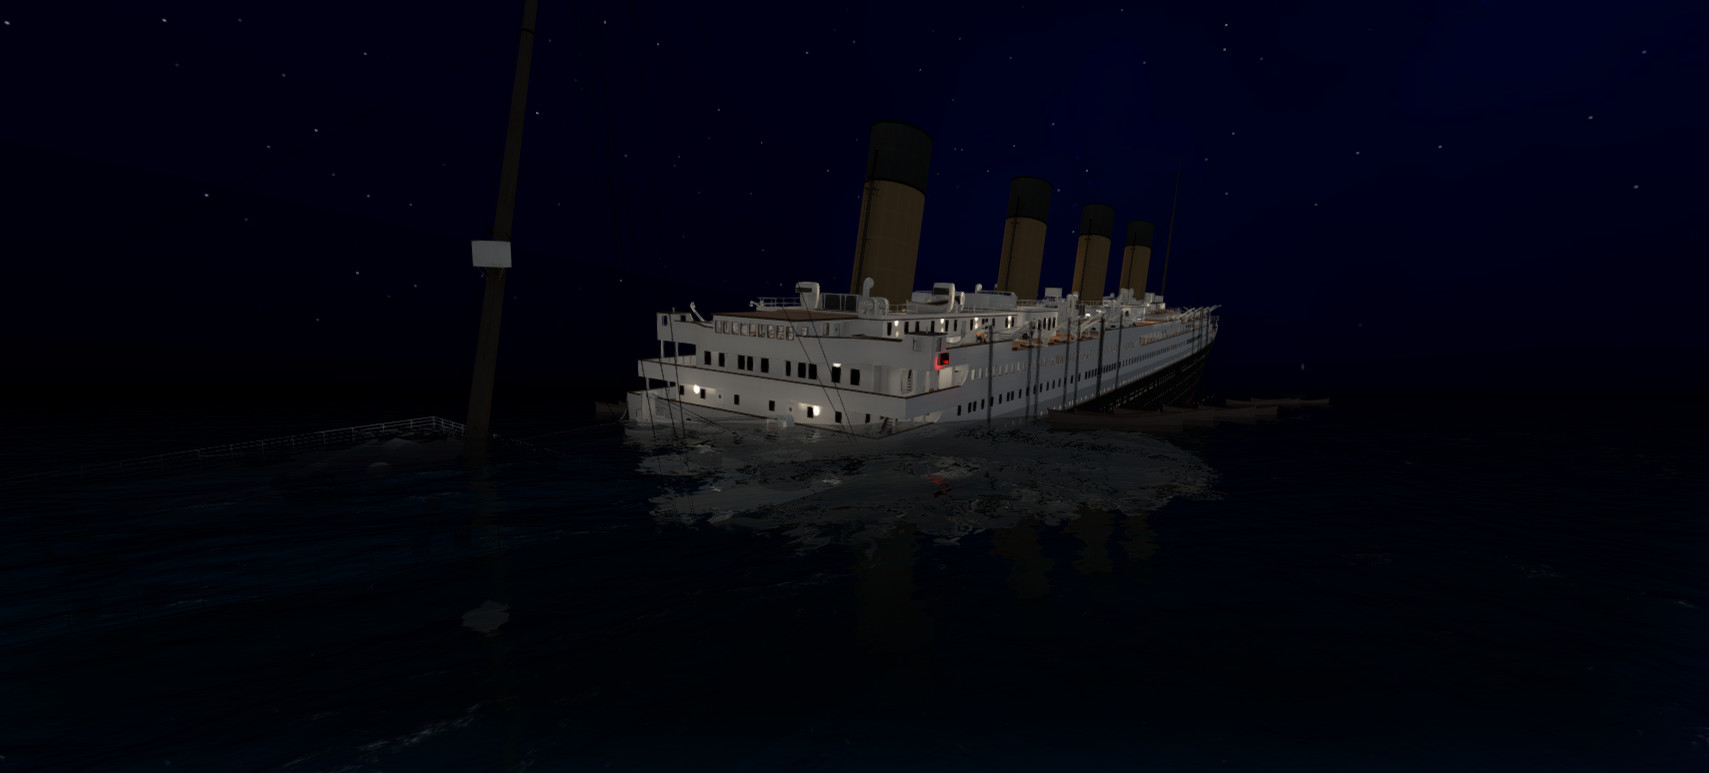 Titanic: The Experience Steam CD Key